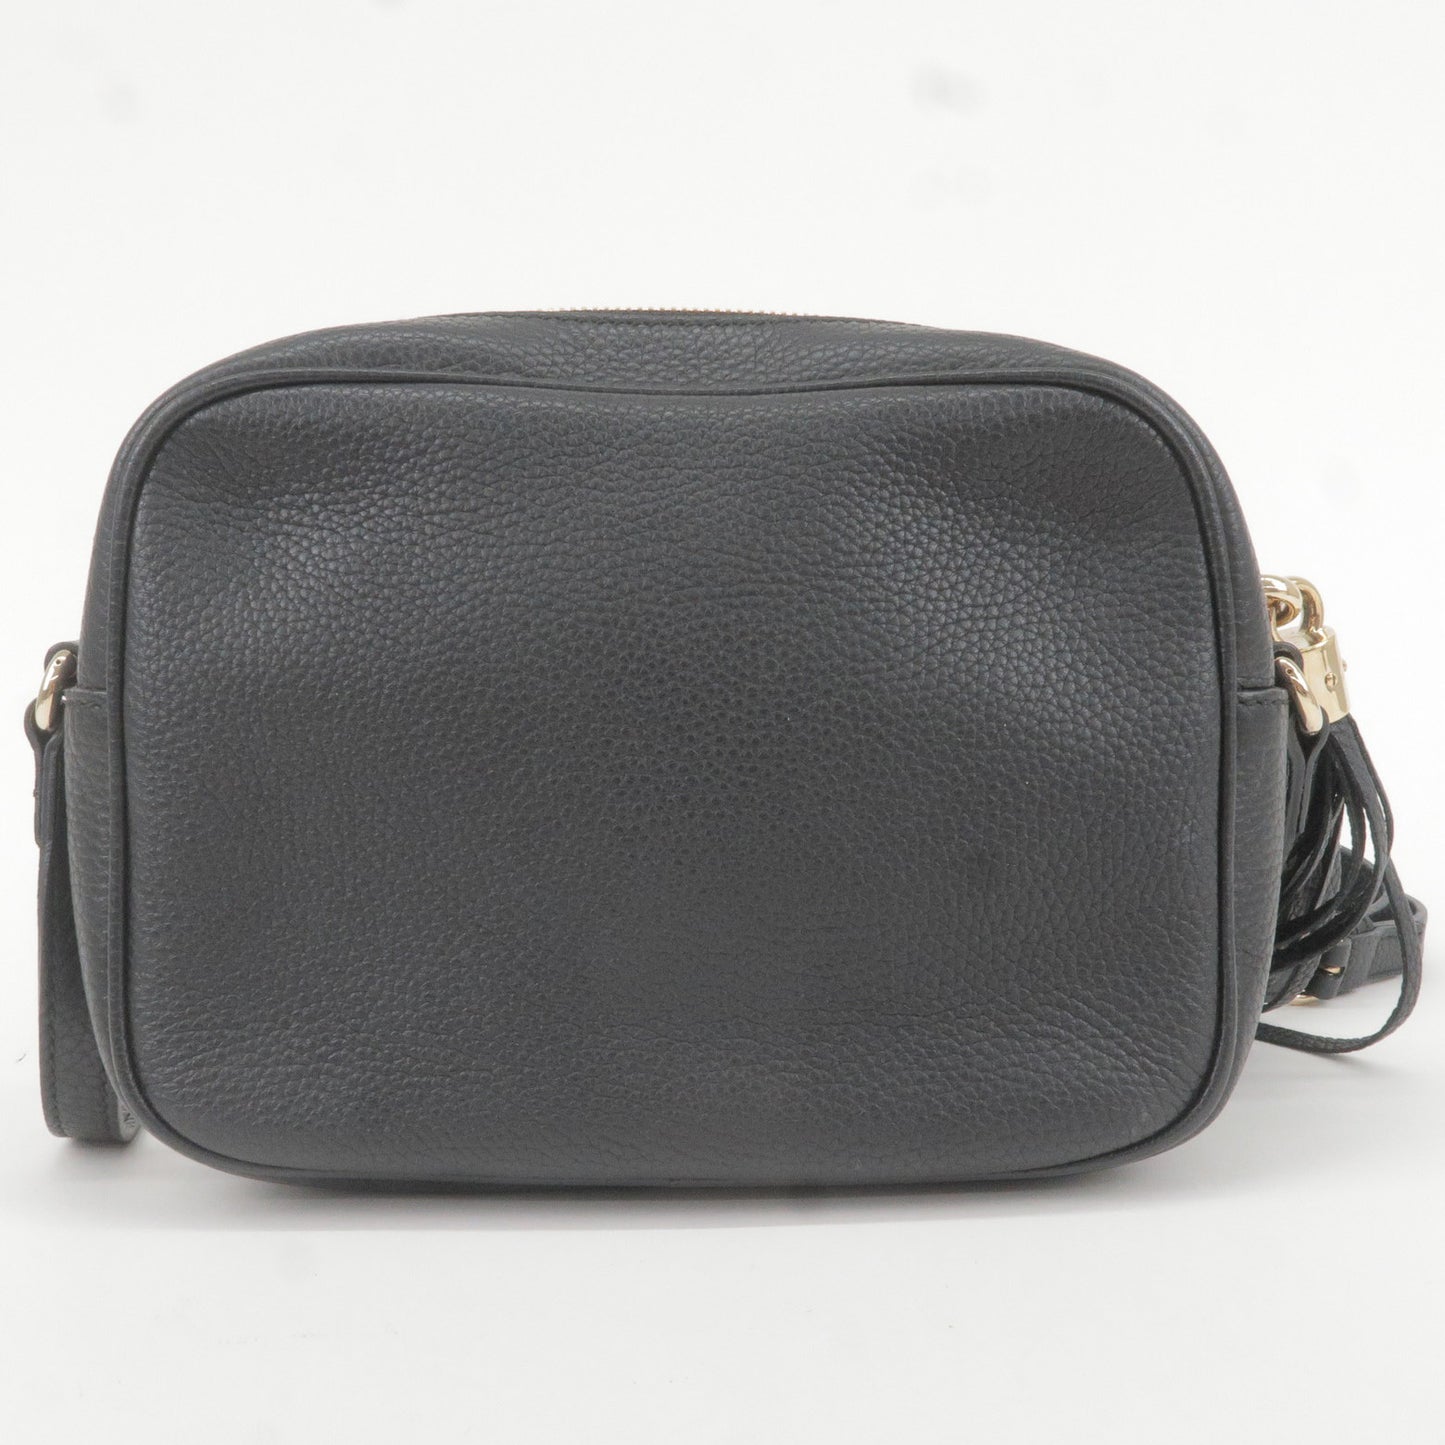 GUCCI SOHO Leather Small Disco Bag Shoulder Bag Black 308364